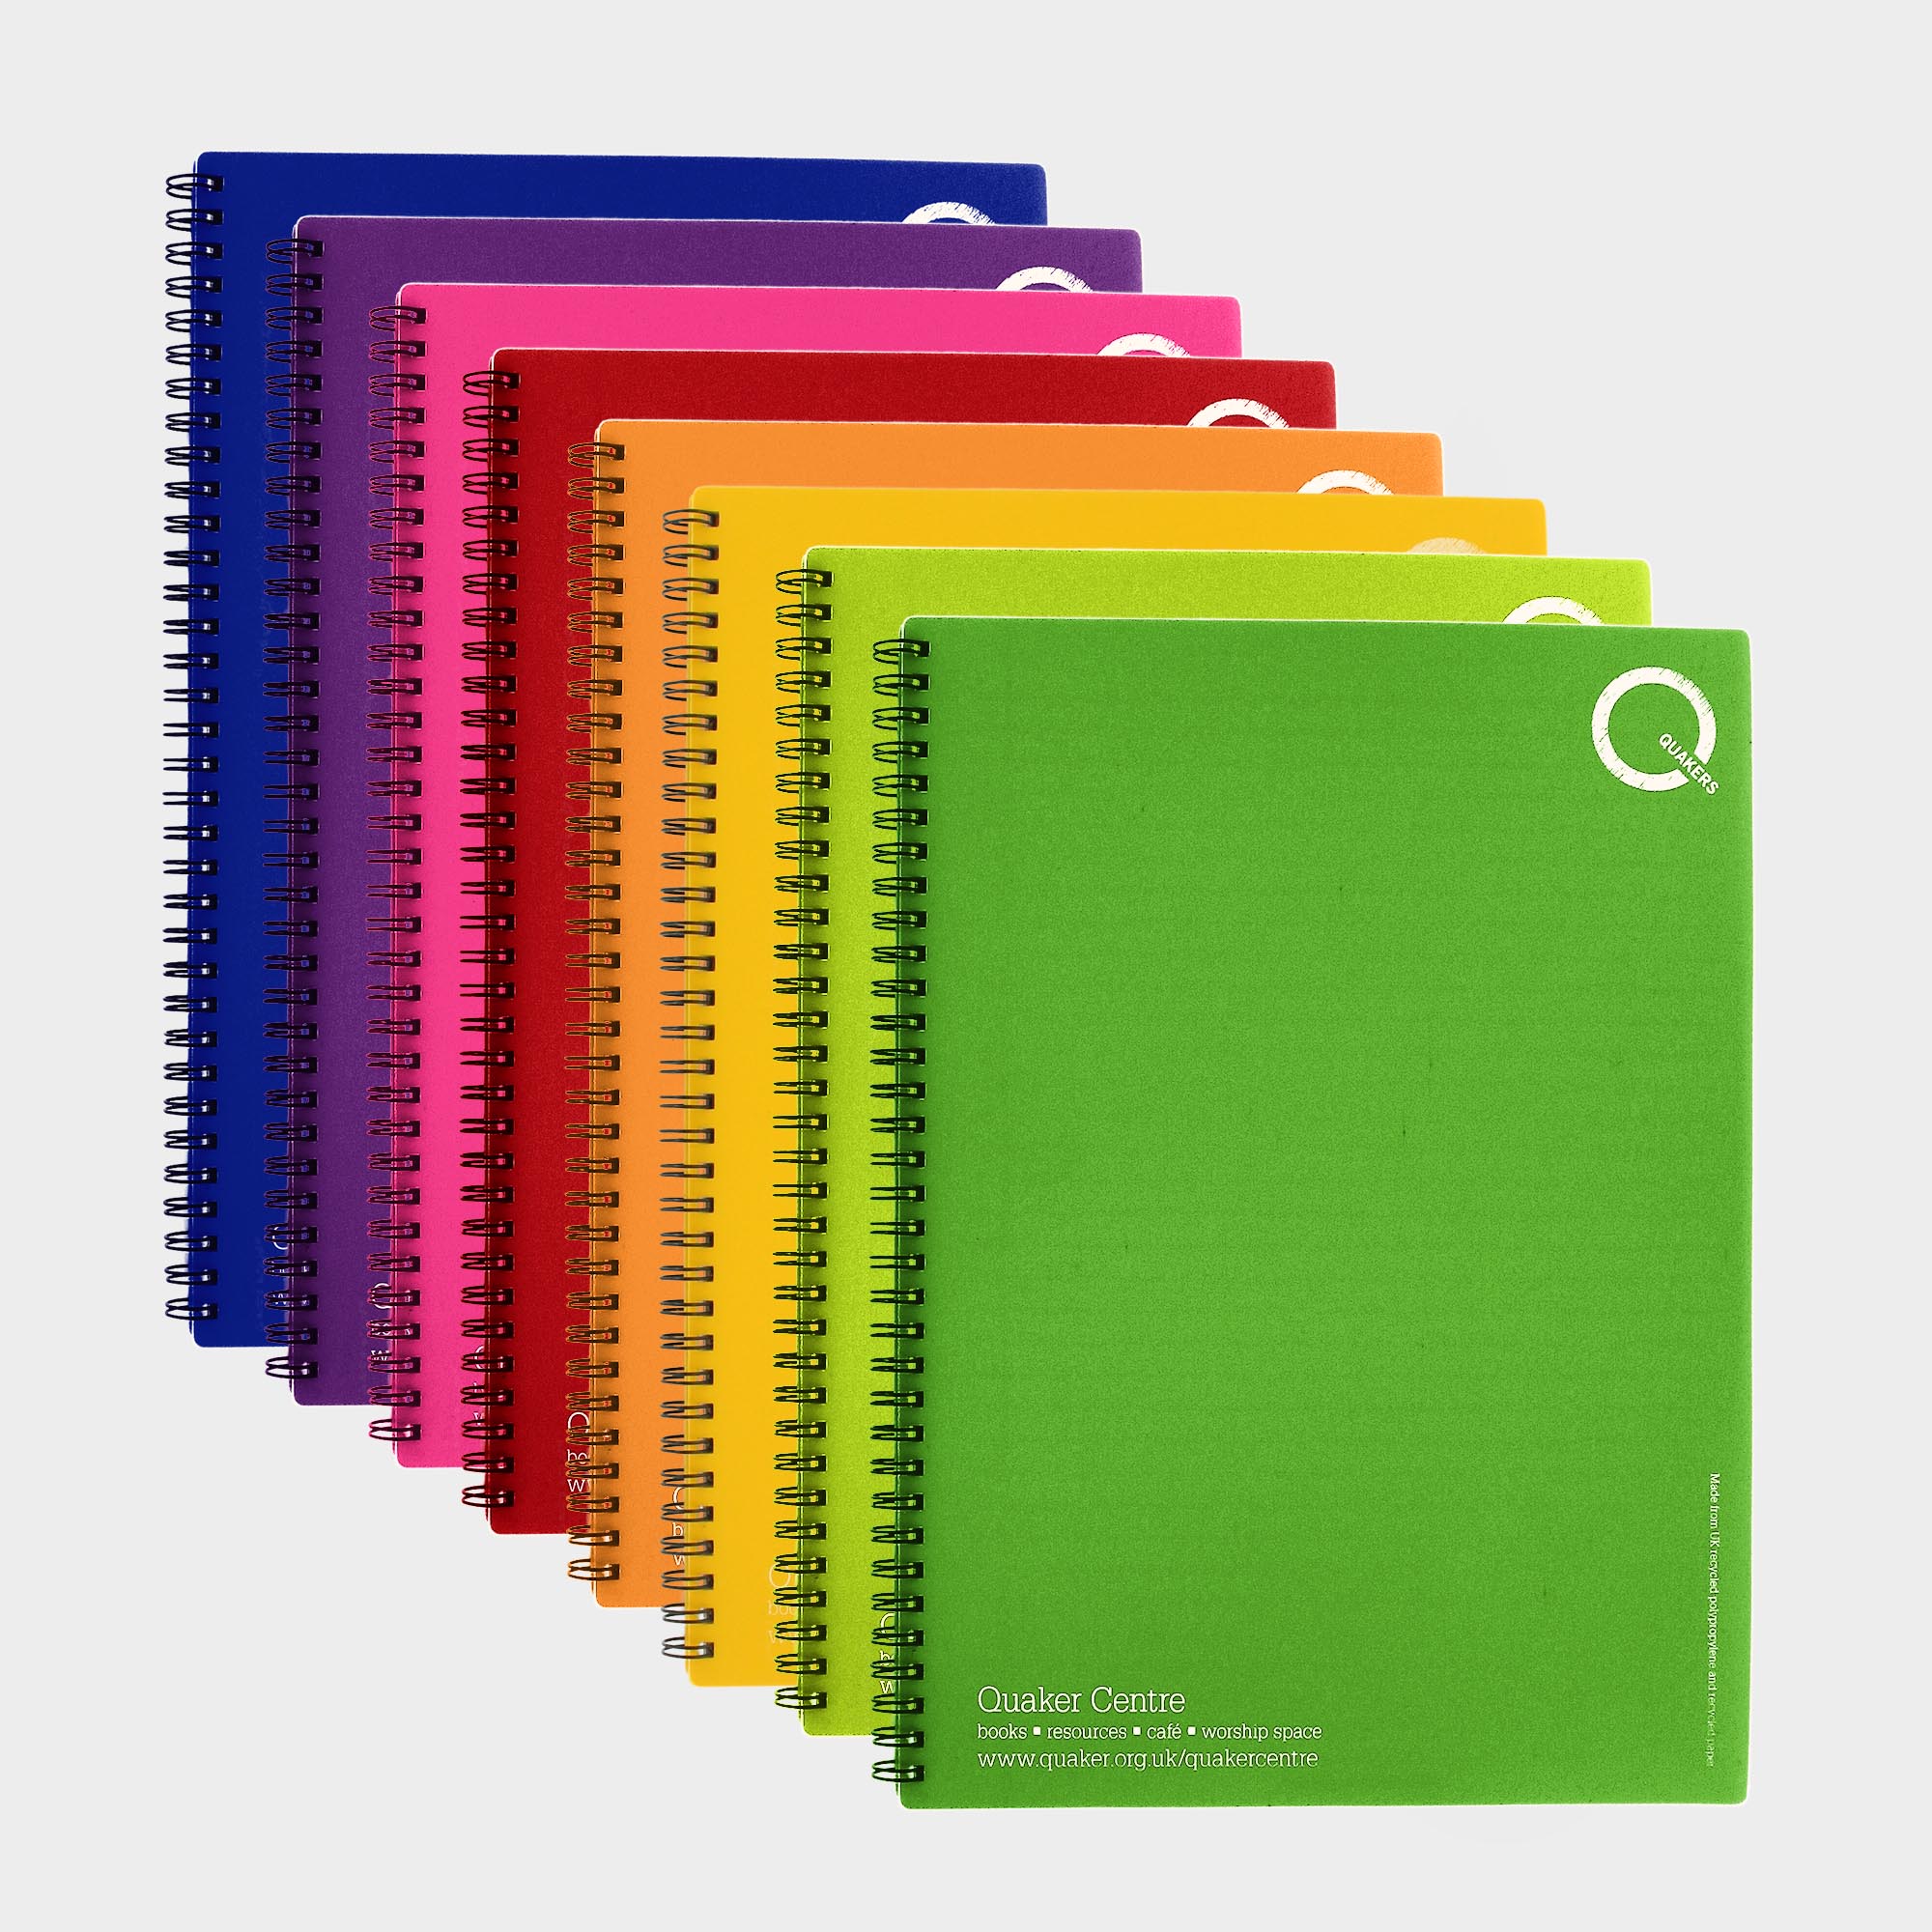 Das Green & Good A4 Notizbuch aus Recycling-Kunststoff und Recycling-Papier.